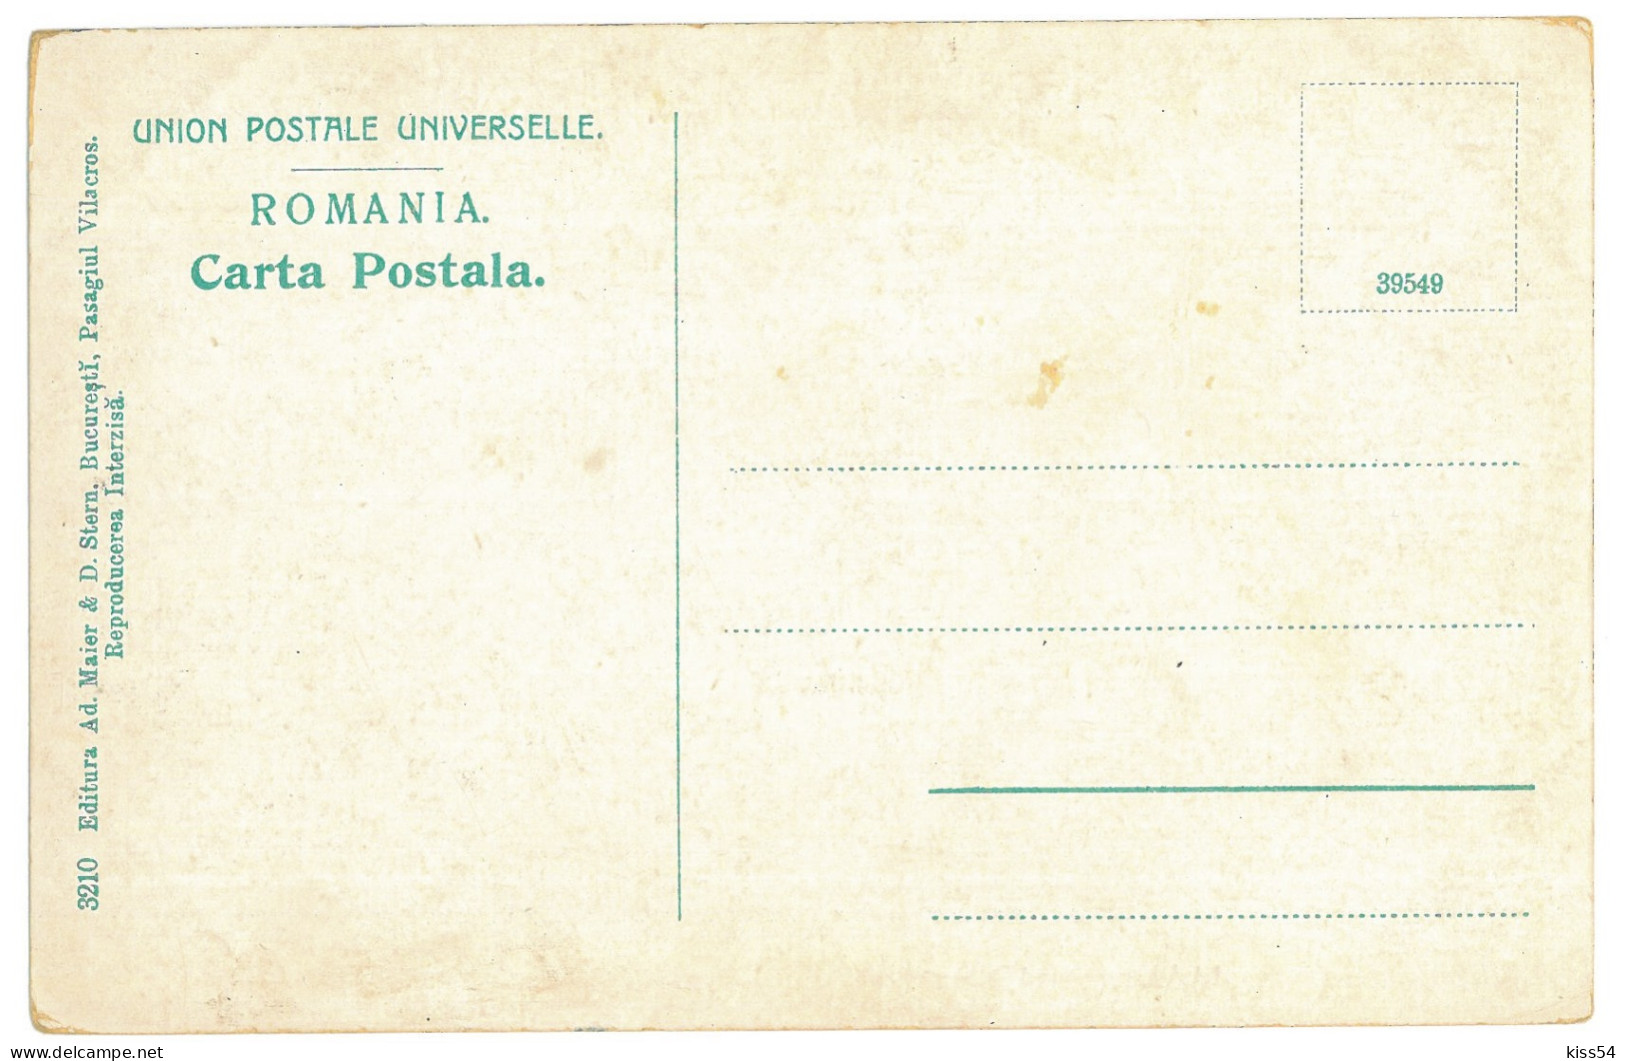 RO 09 - 25106 MORENI, Dambovita, Oil Wells, FIRE, Romania - Old Postcard - Unused - Rumänien